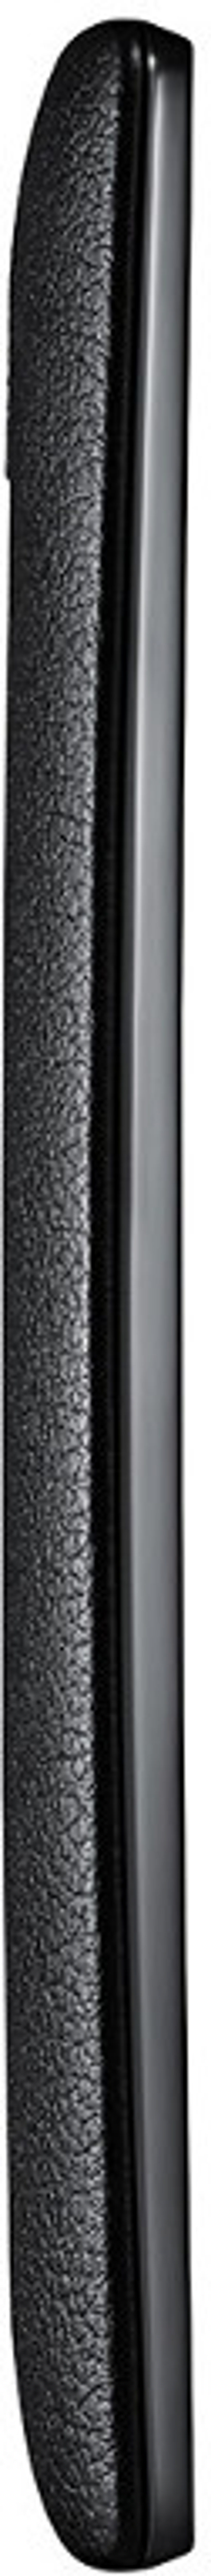 LG G4 GB Schwarz 32GB LEATHER 32 BLACK VERSION